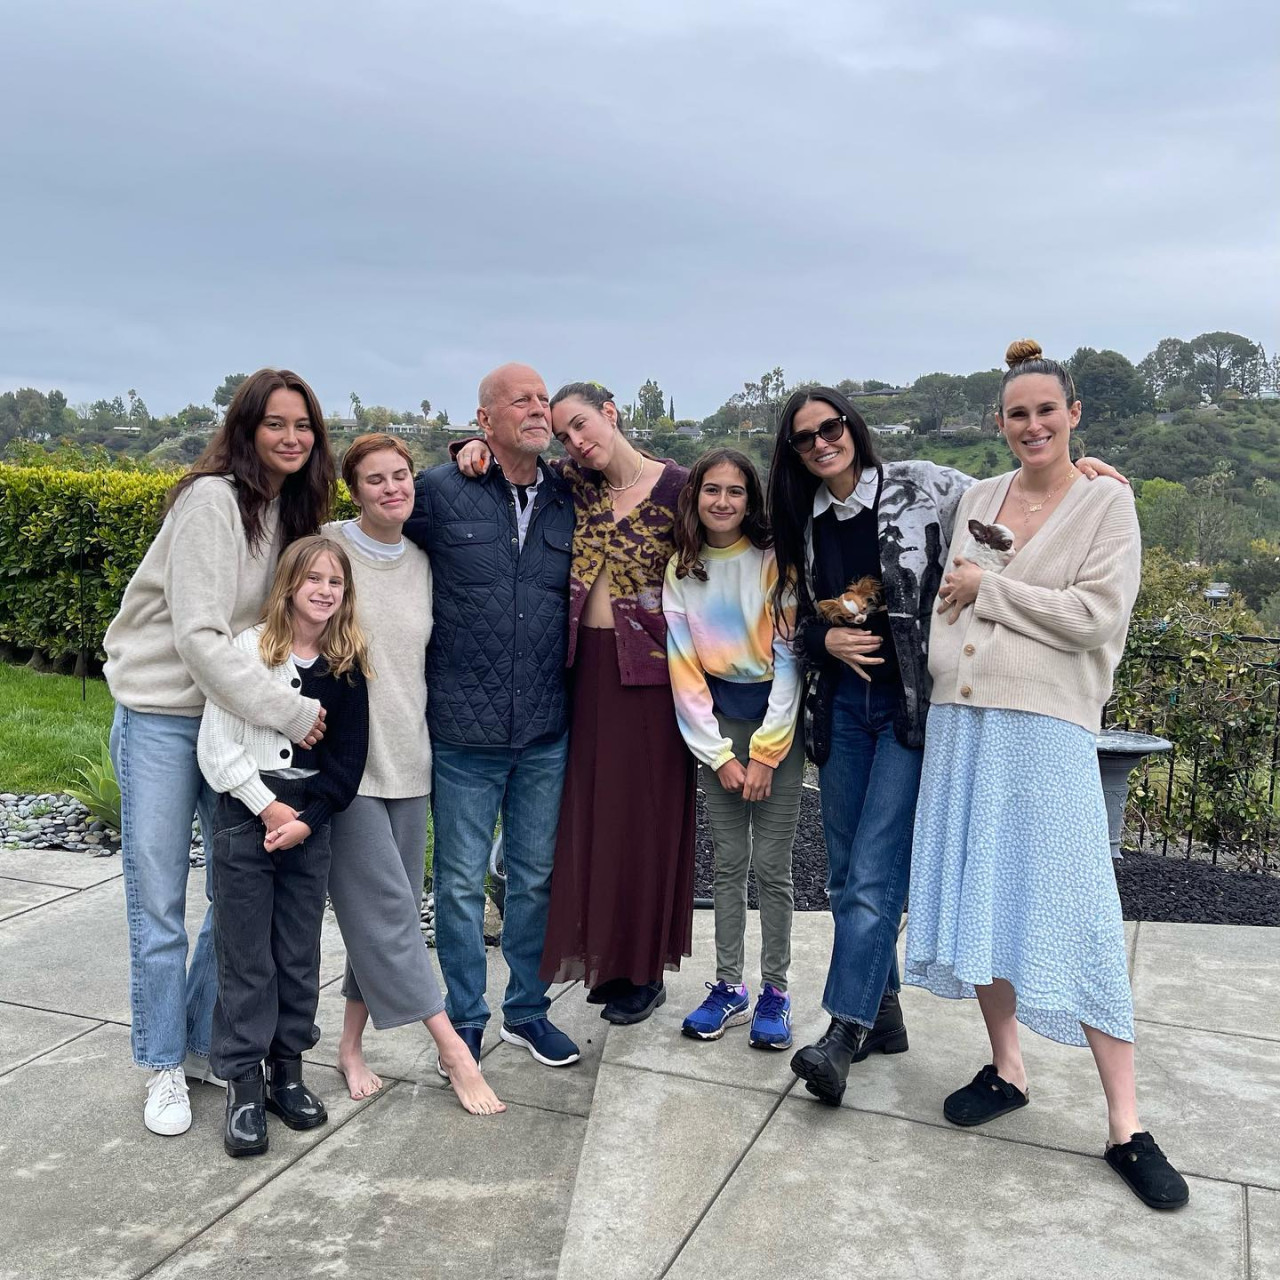 Bruce Willis junto a su familia. Foto: Instagram